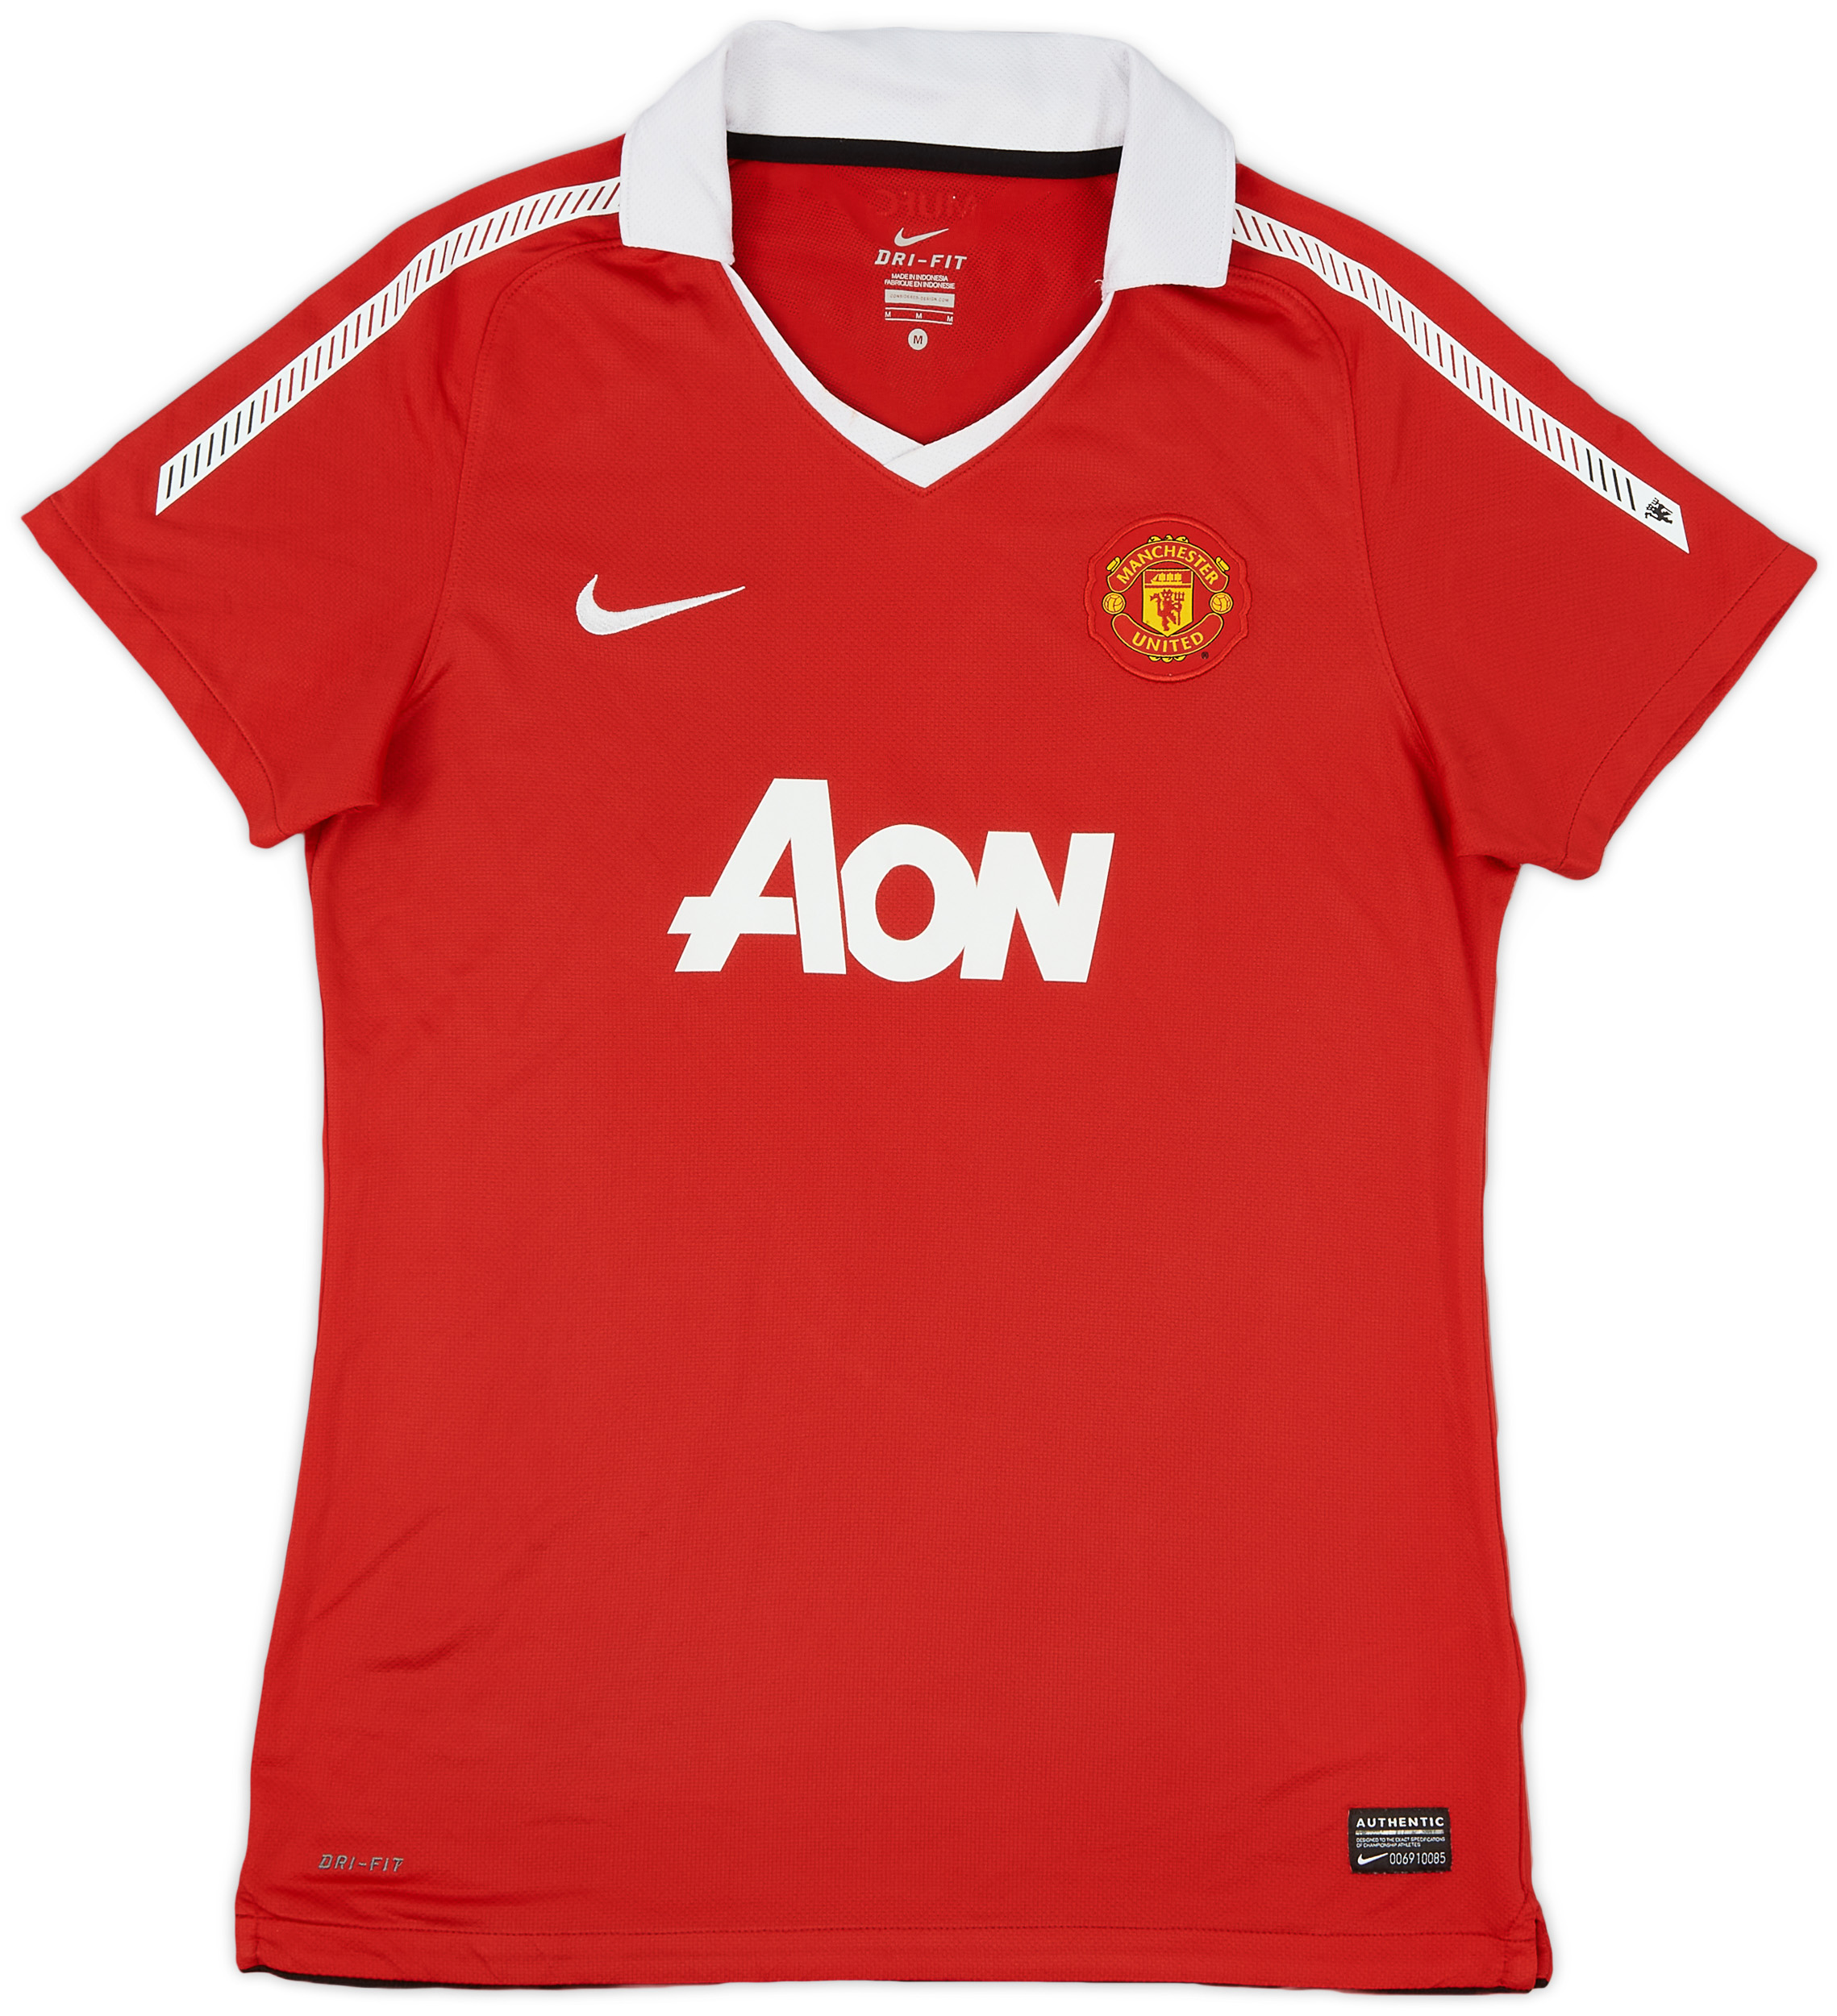 2010-11 Manchester United Home Shirt - 9/10 - (Women's )